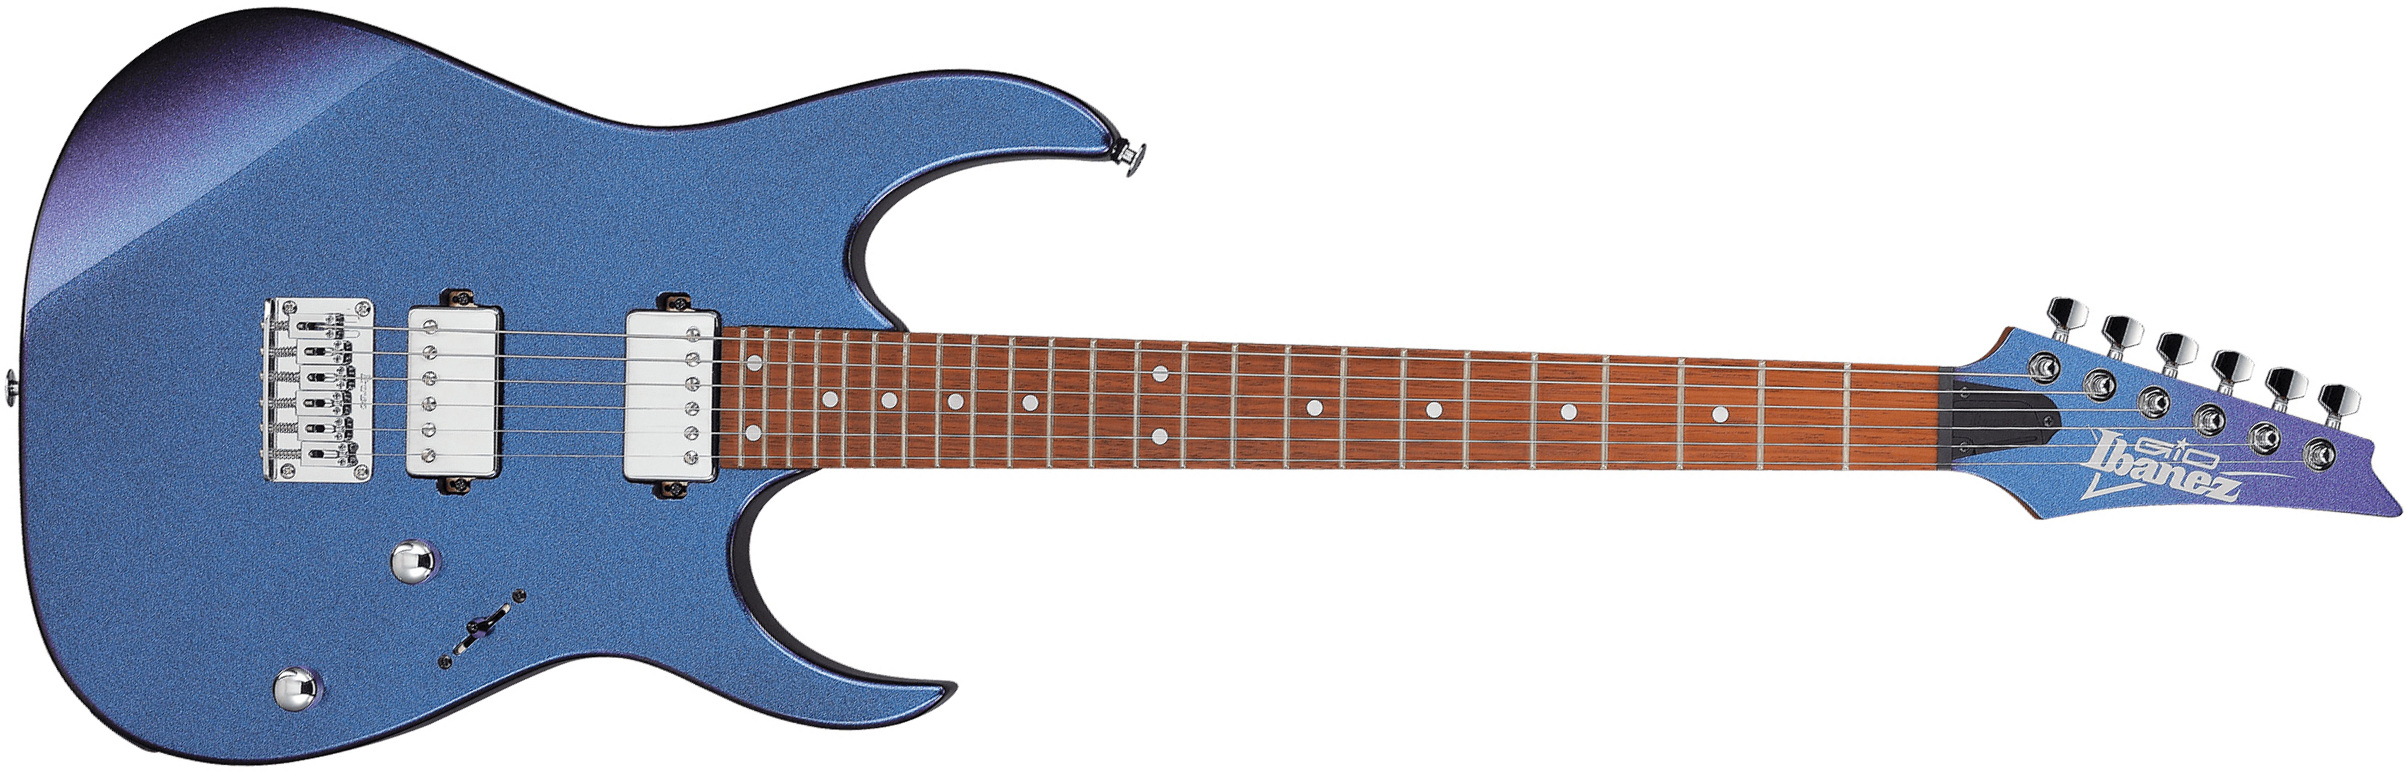 Ibanez Grg121sp Bmc Ltd Gio Hh Ht Jat - Blue Metal Cameleon - E-Gitarre in Str-Form - Main picture